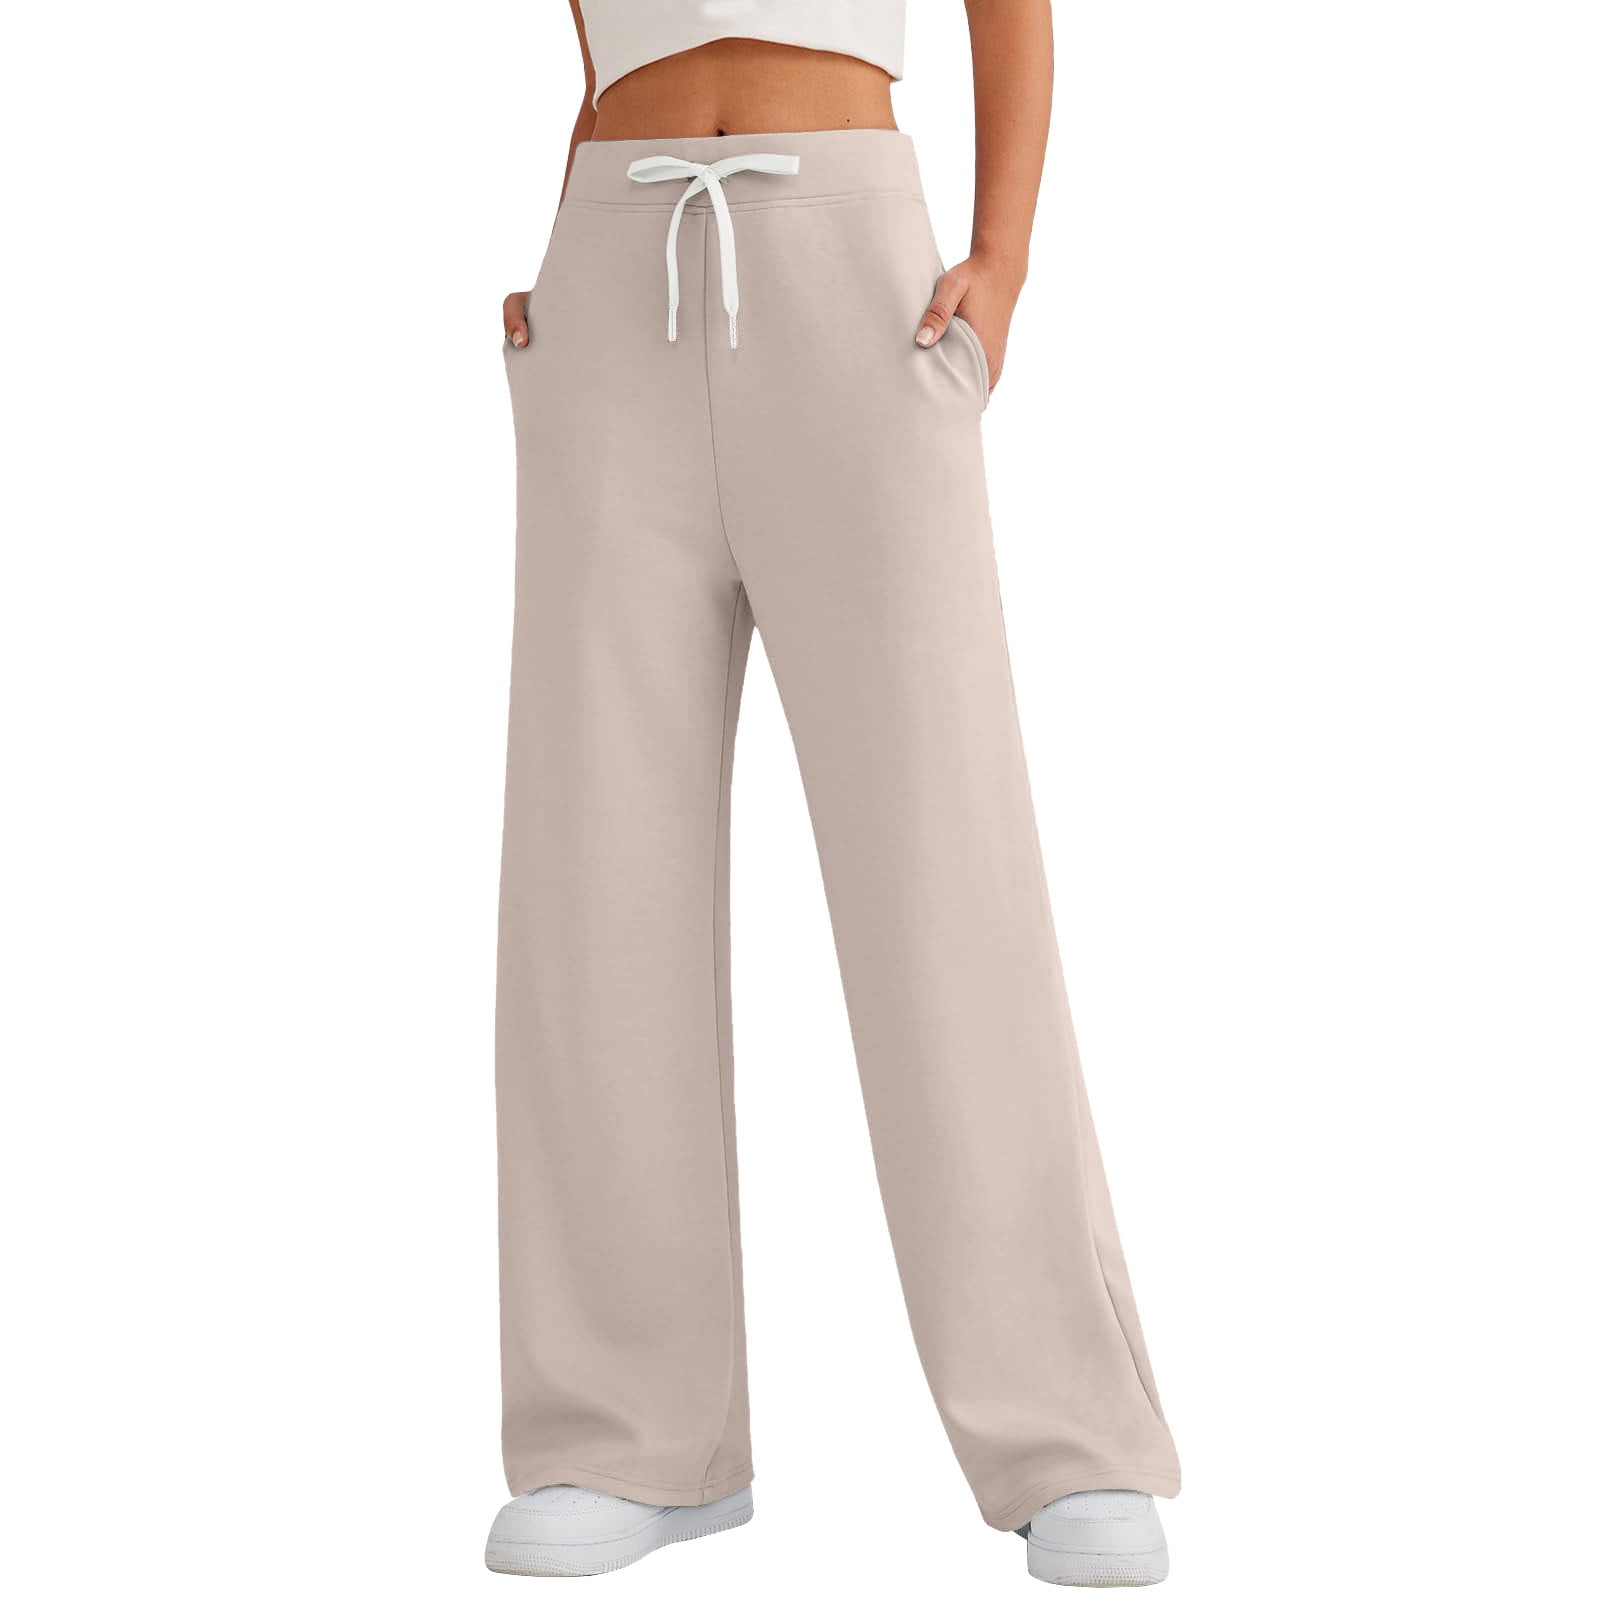 Susanny Women's Sweatpants Cotton with Pockets Open Bottom Petite